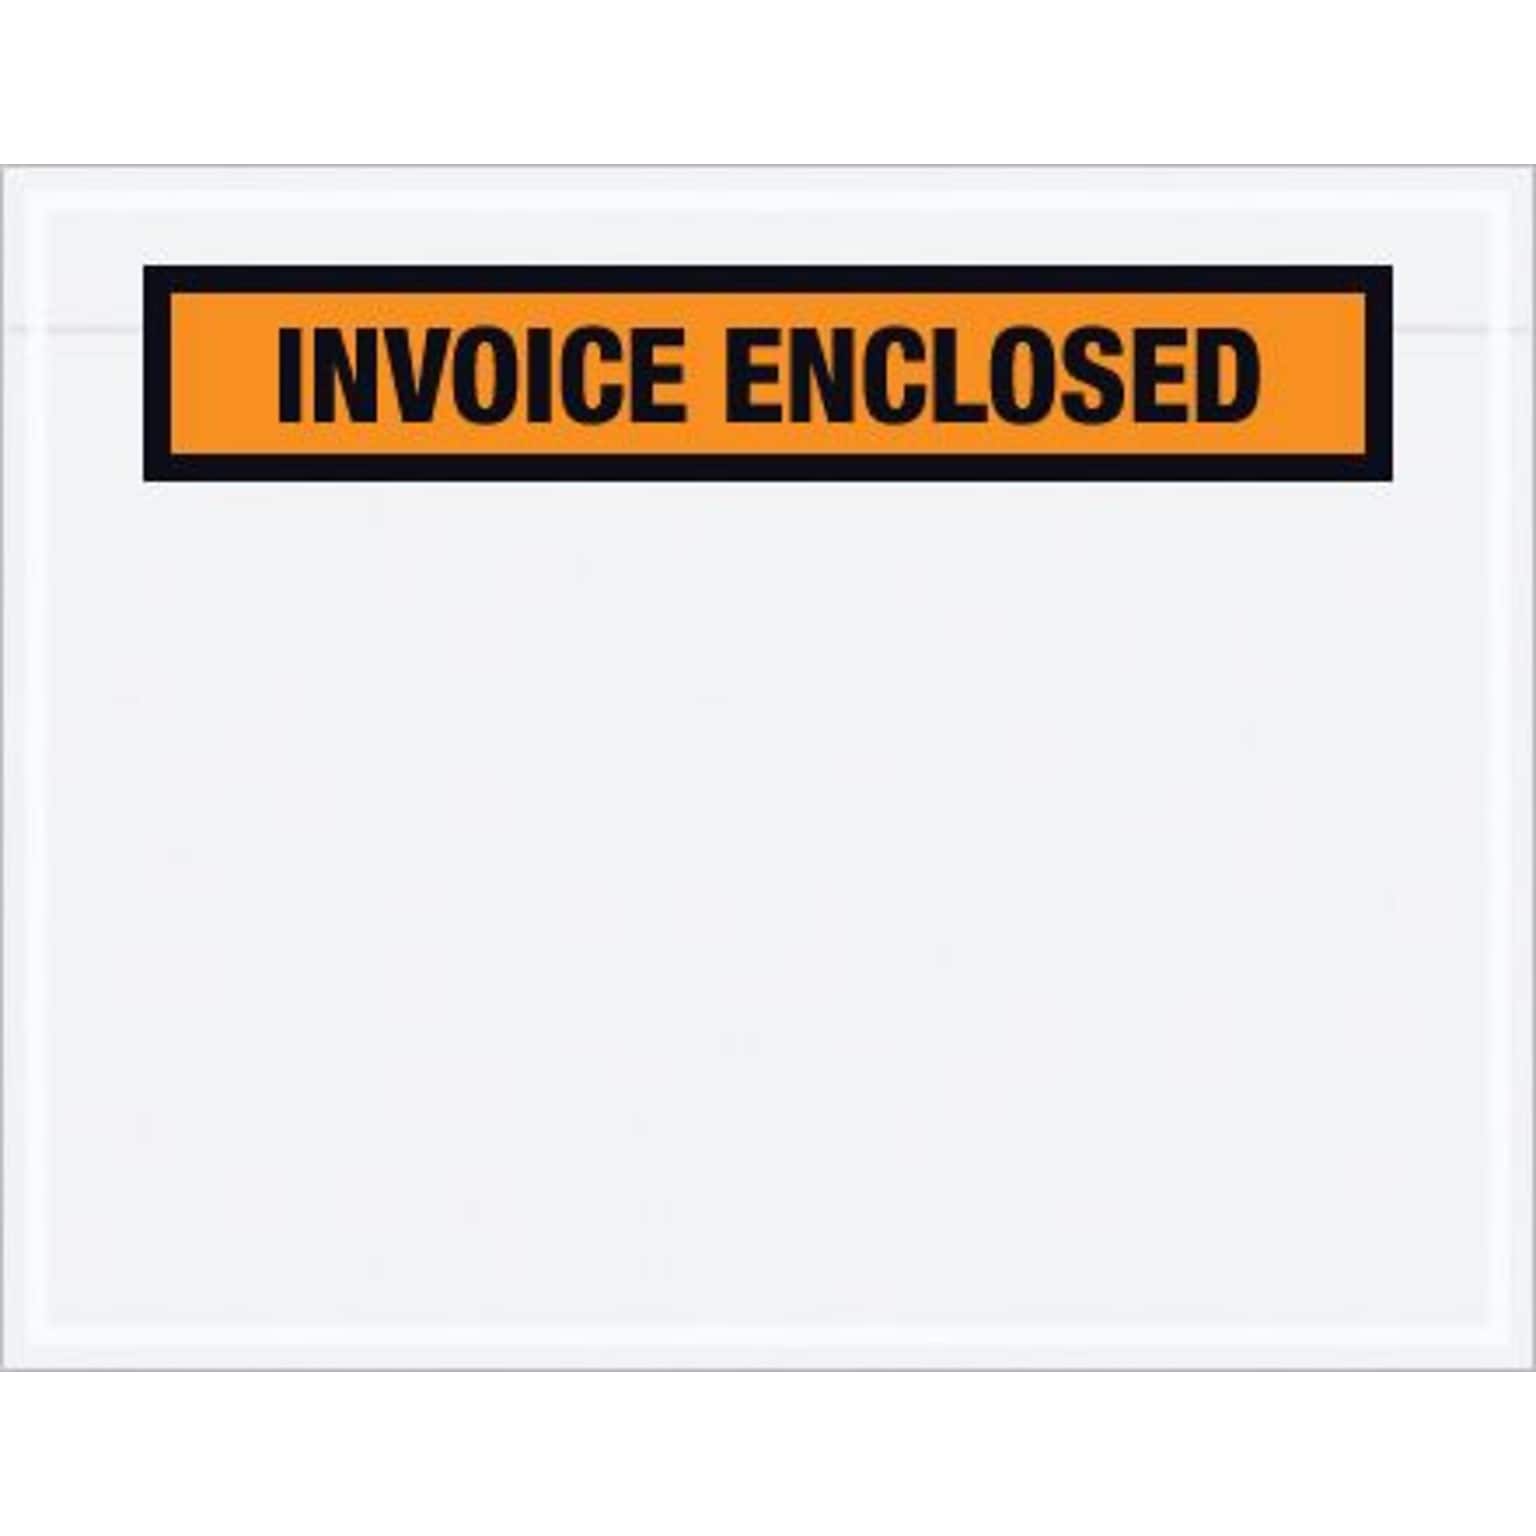 Quill Brand® Packing List Envelope, 7 x 5.5, Orange Panel Face, Invoice Enclosed, 1000/Case (PL23)